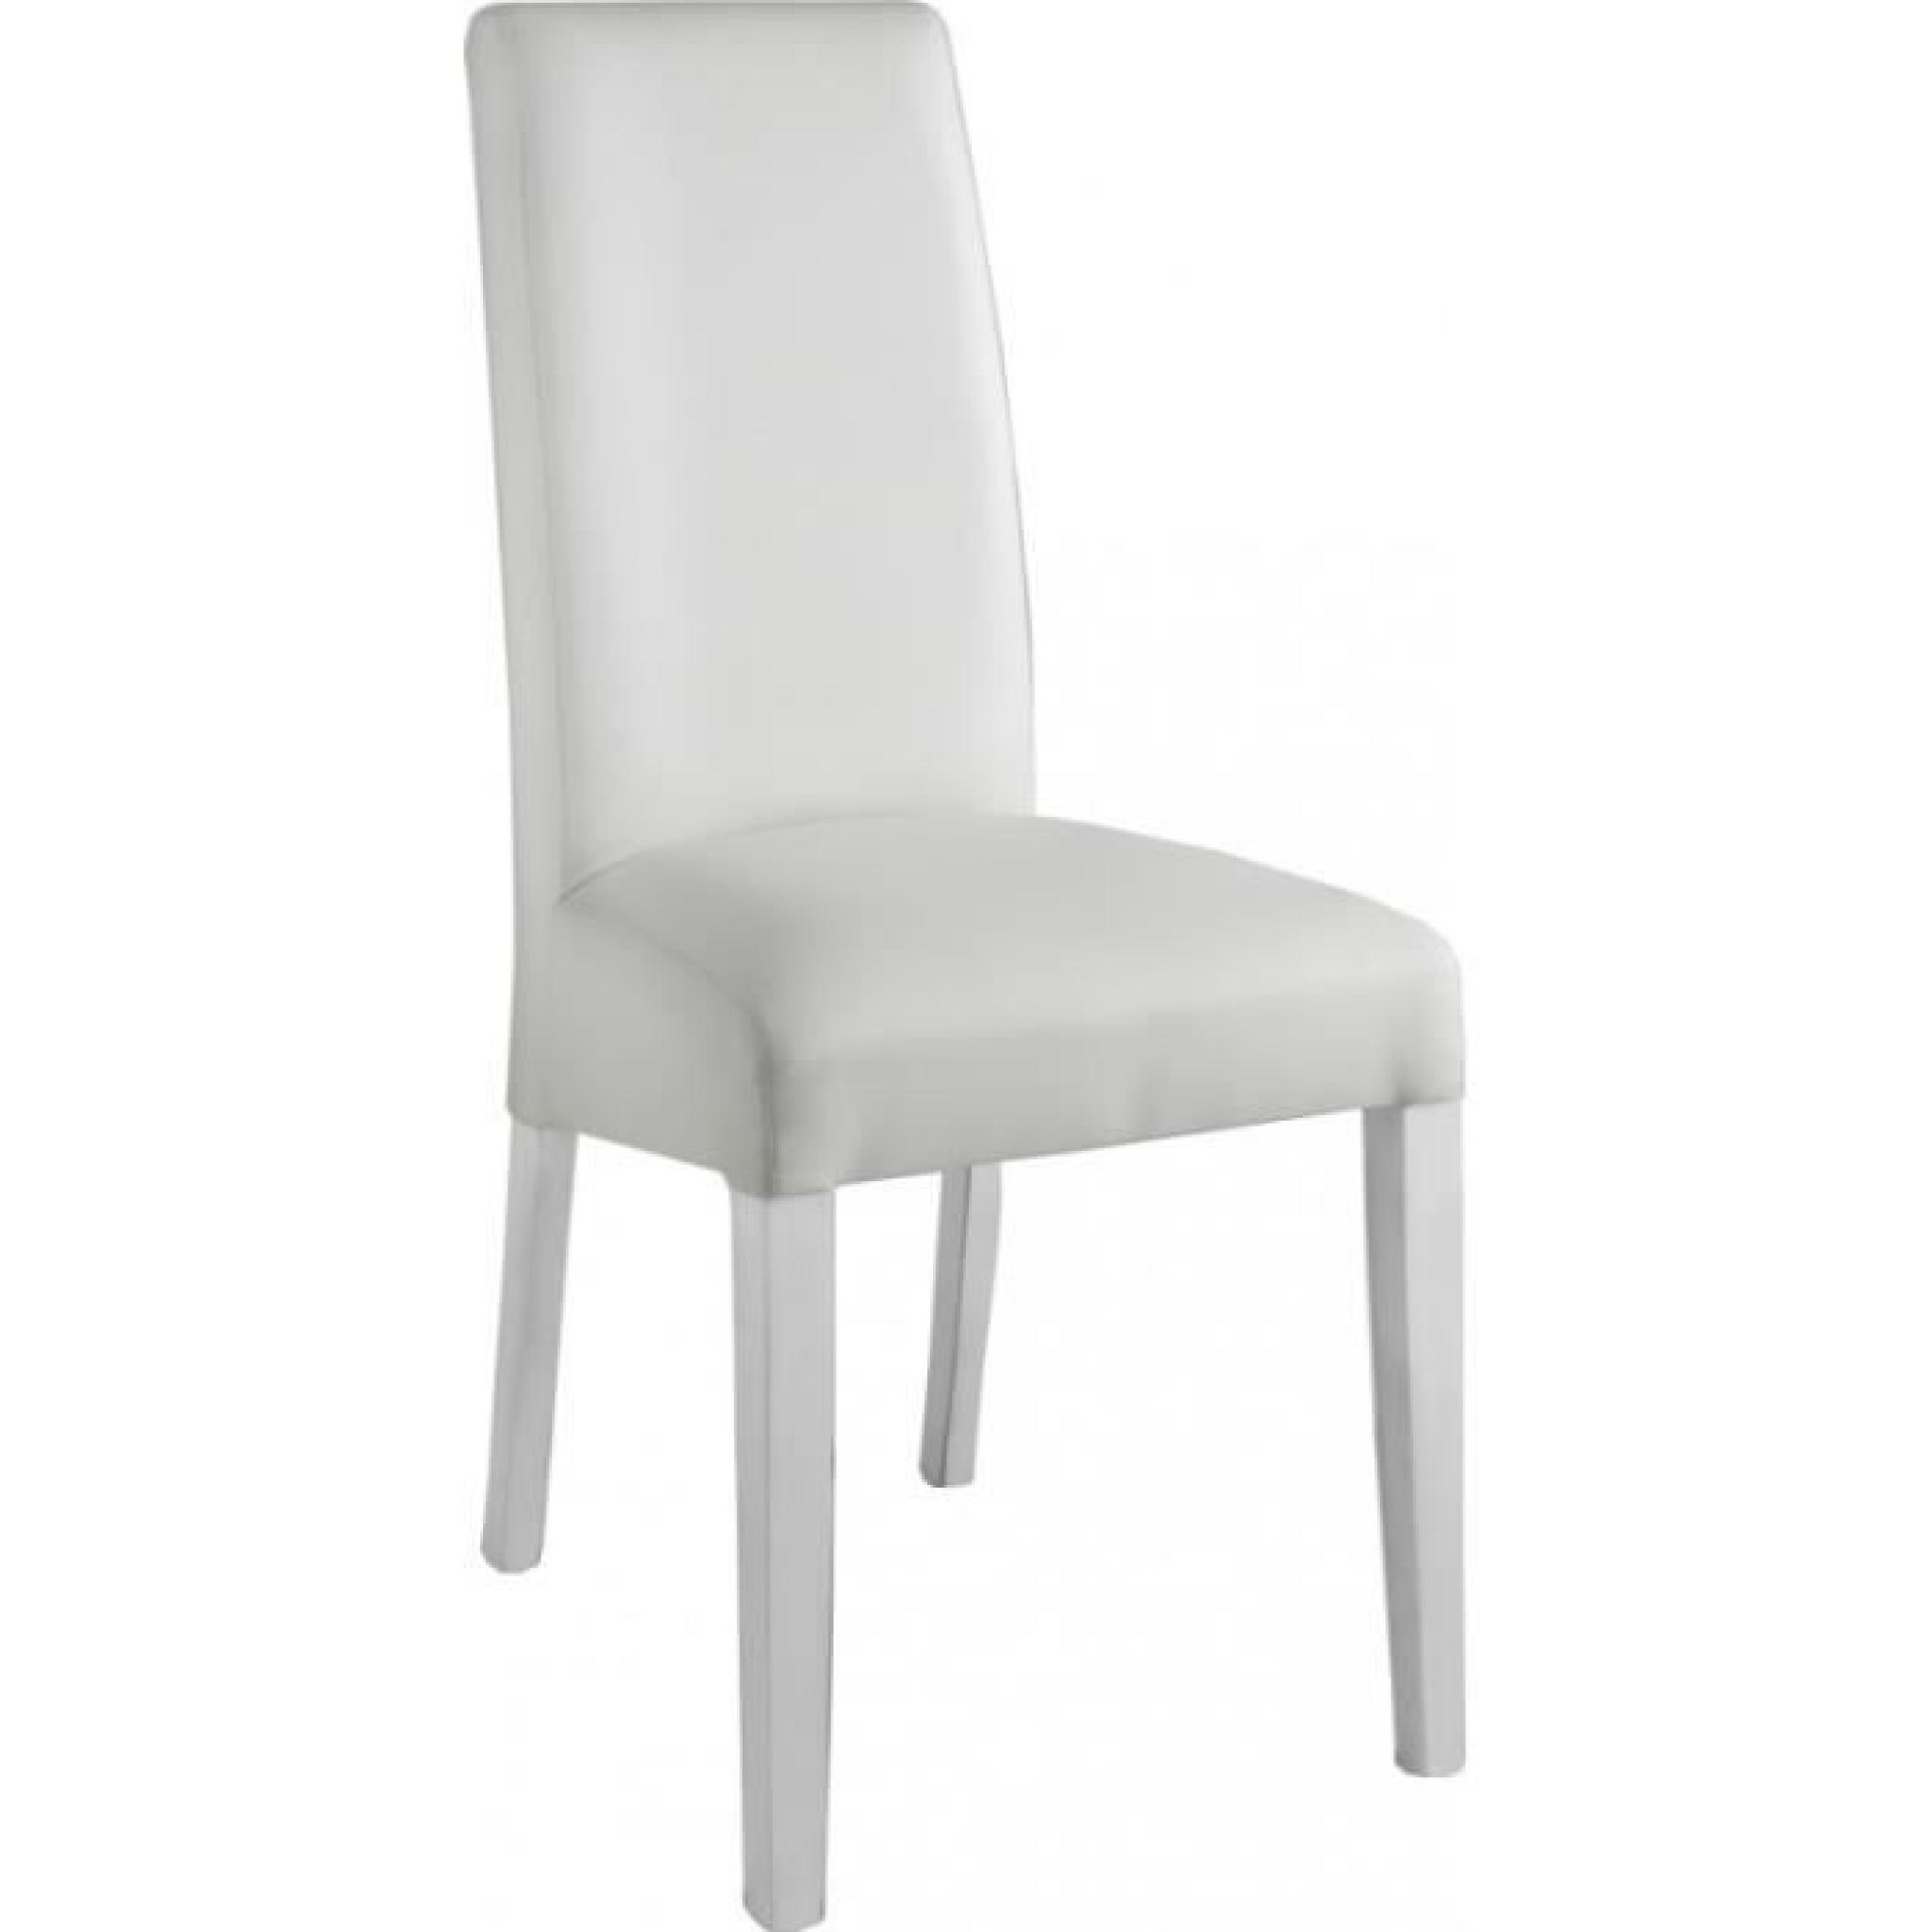 Lot de 2 chaises simili cuir coloris blanc Model ADRIA